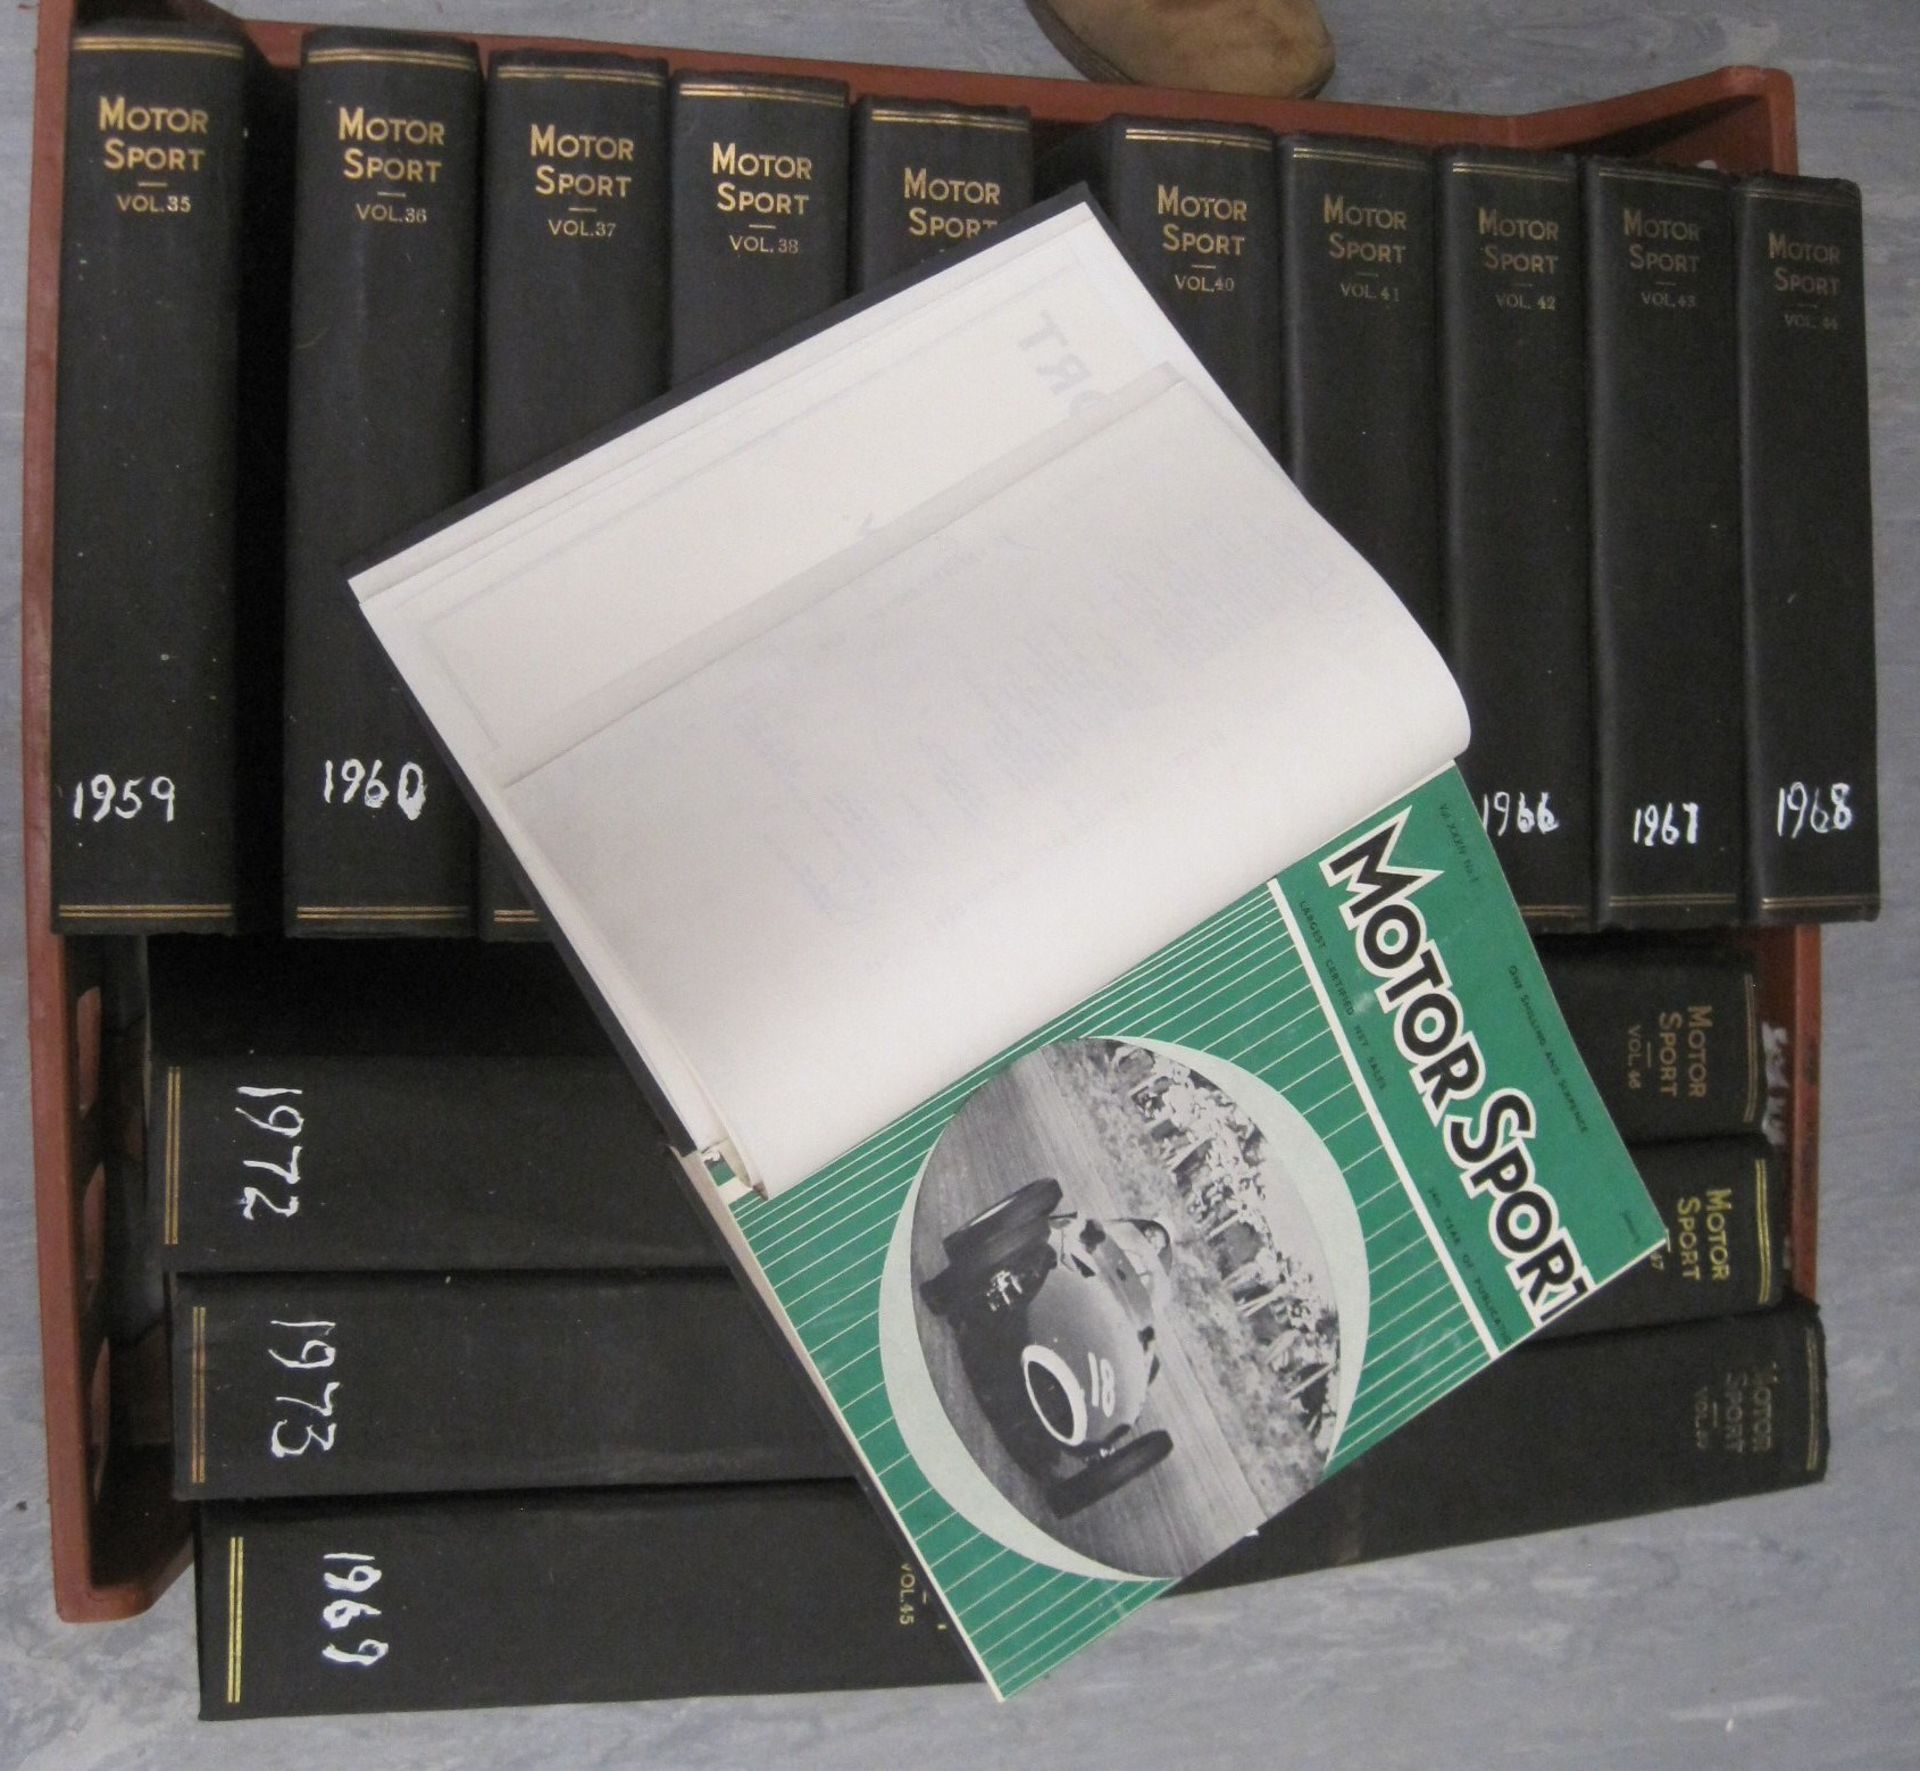 MotorSport 17 bound volumes 1958 (volumes 34) - 1974 (volume 50) c/w covers and index